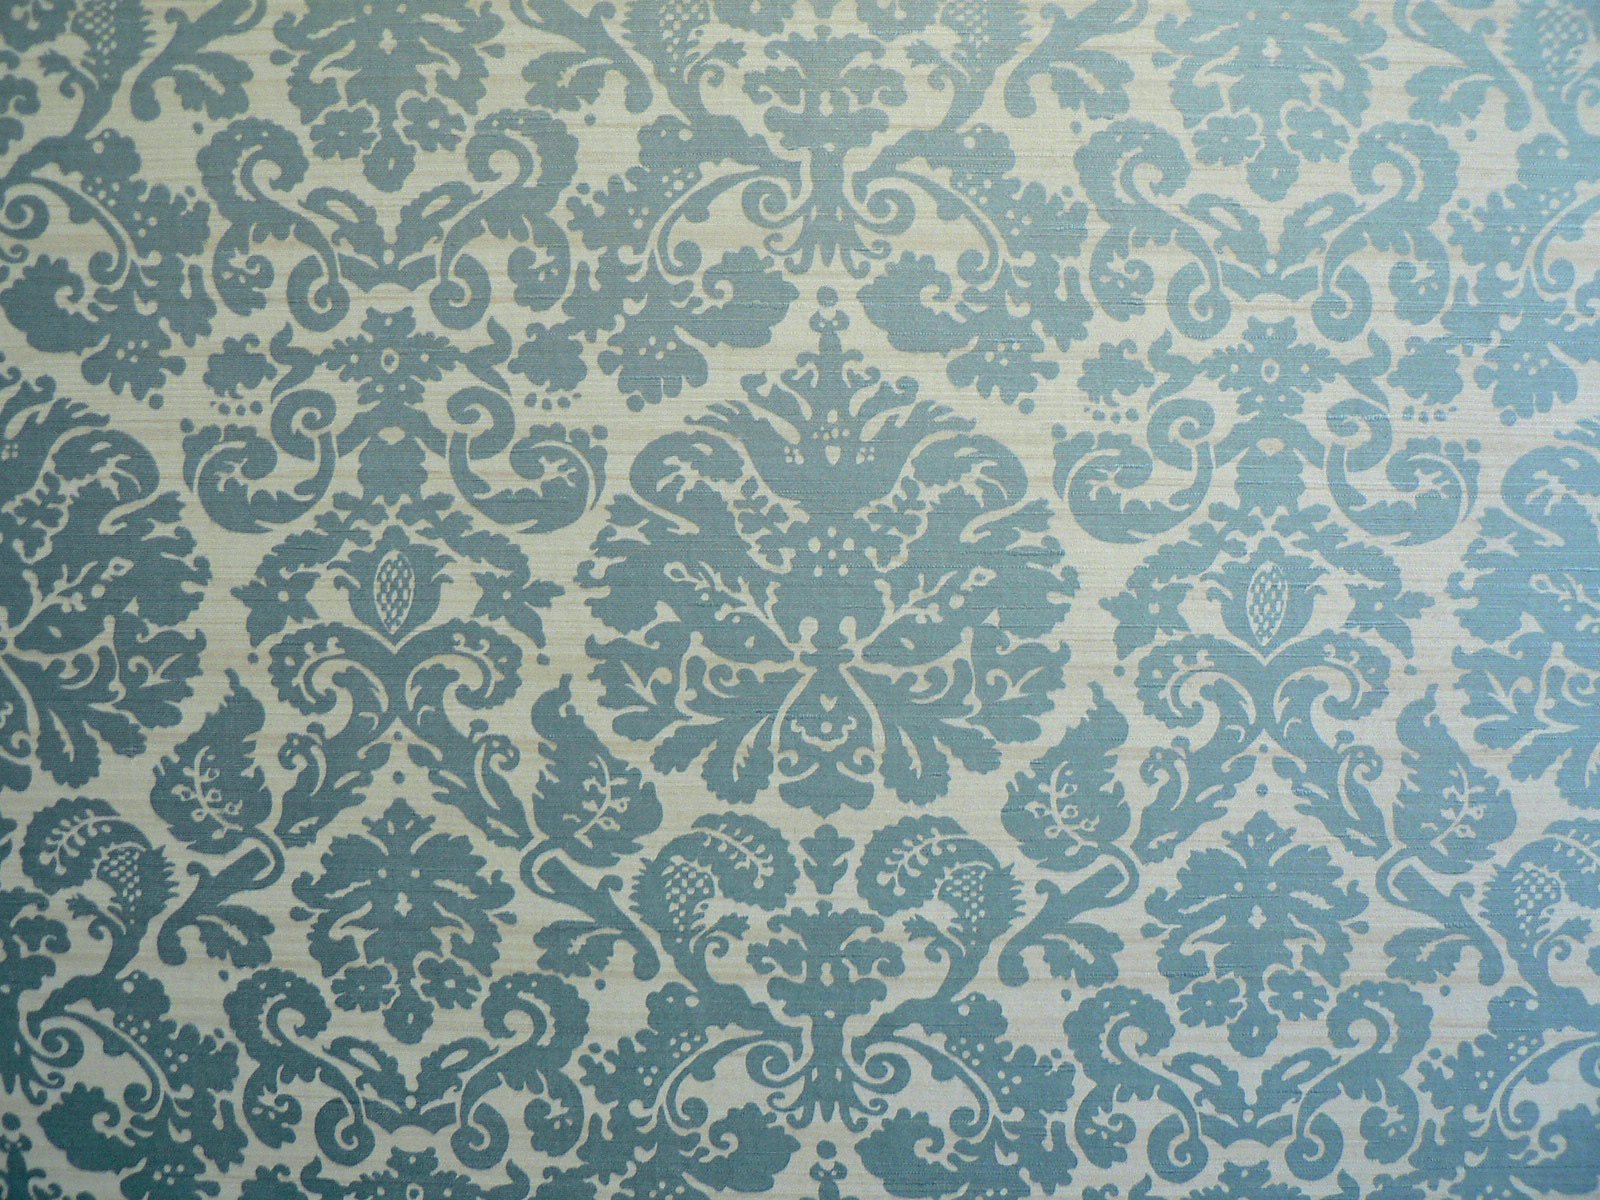 Patterns Textures Wallpaper 16001200 Patterns Textures Damask